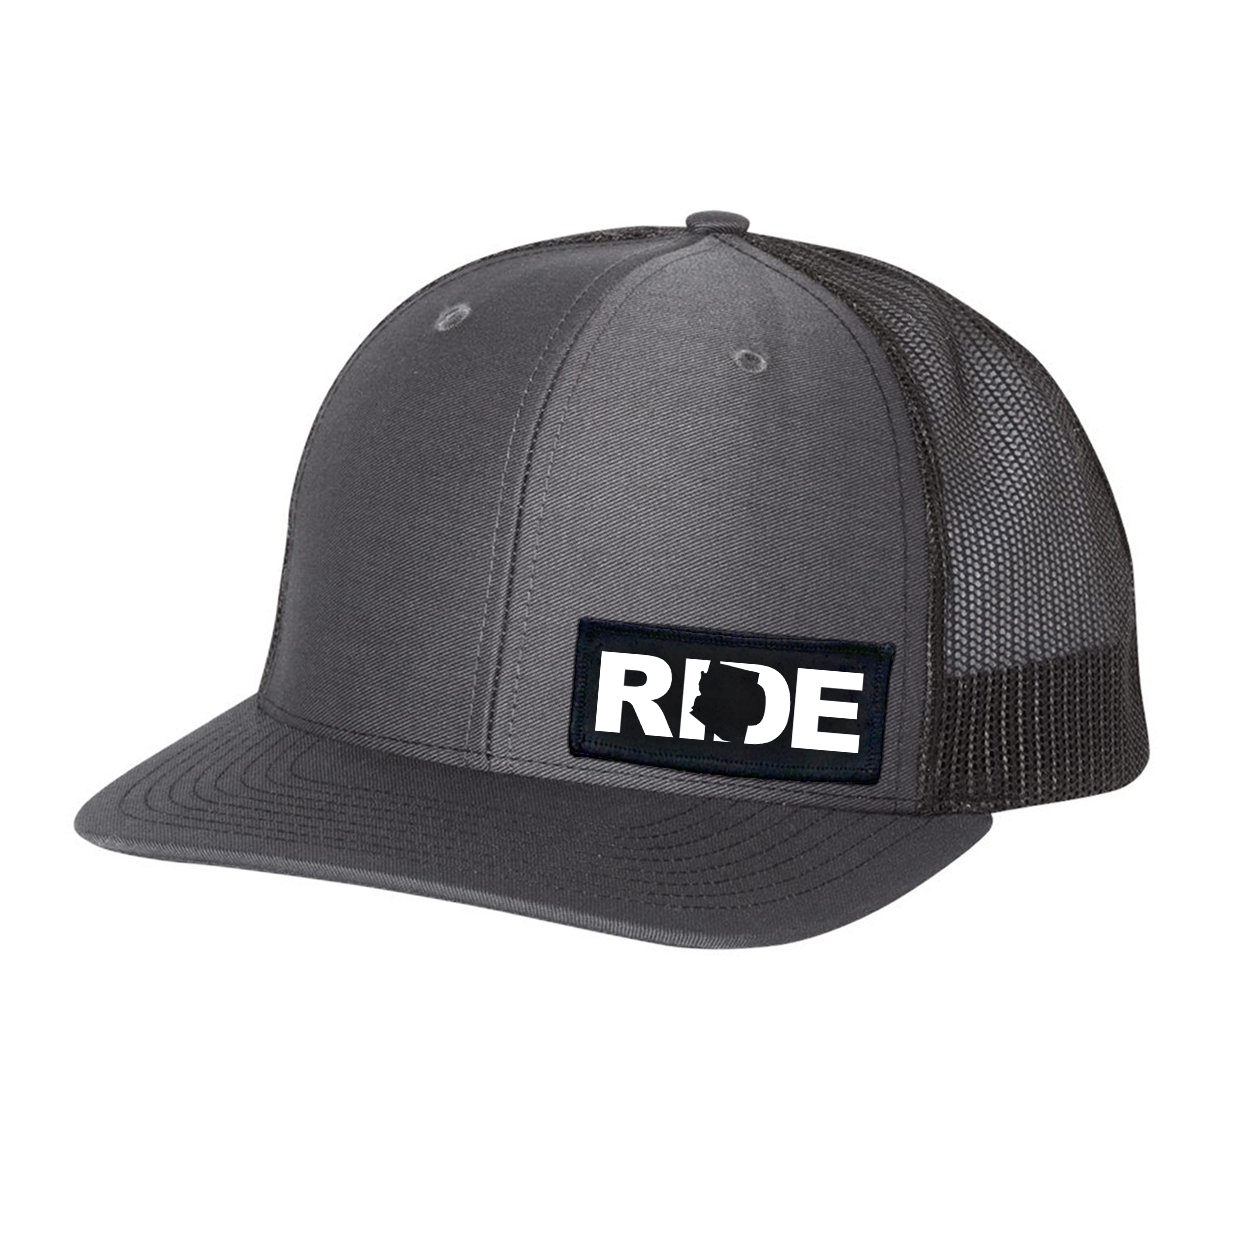 Ride Arizona Night Out Woven Patch Flex-Fit Hat Dark Gray/Black (White Logo)